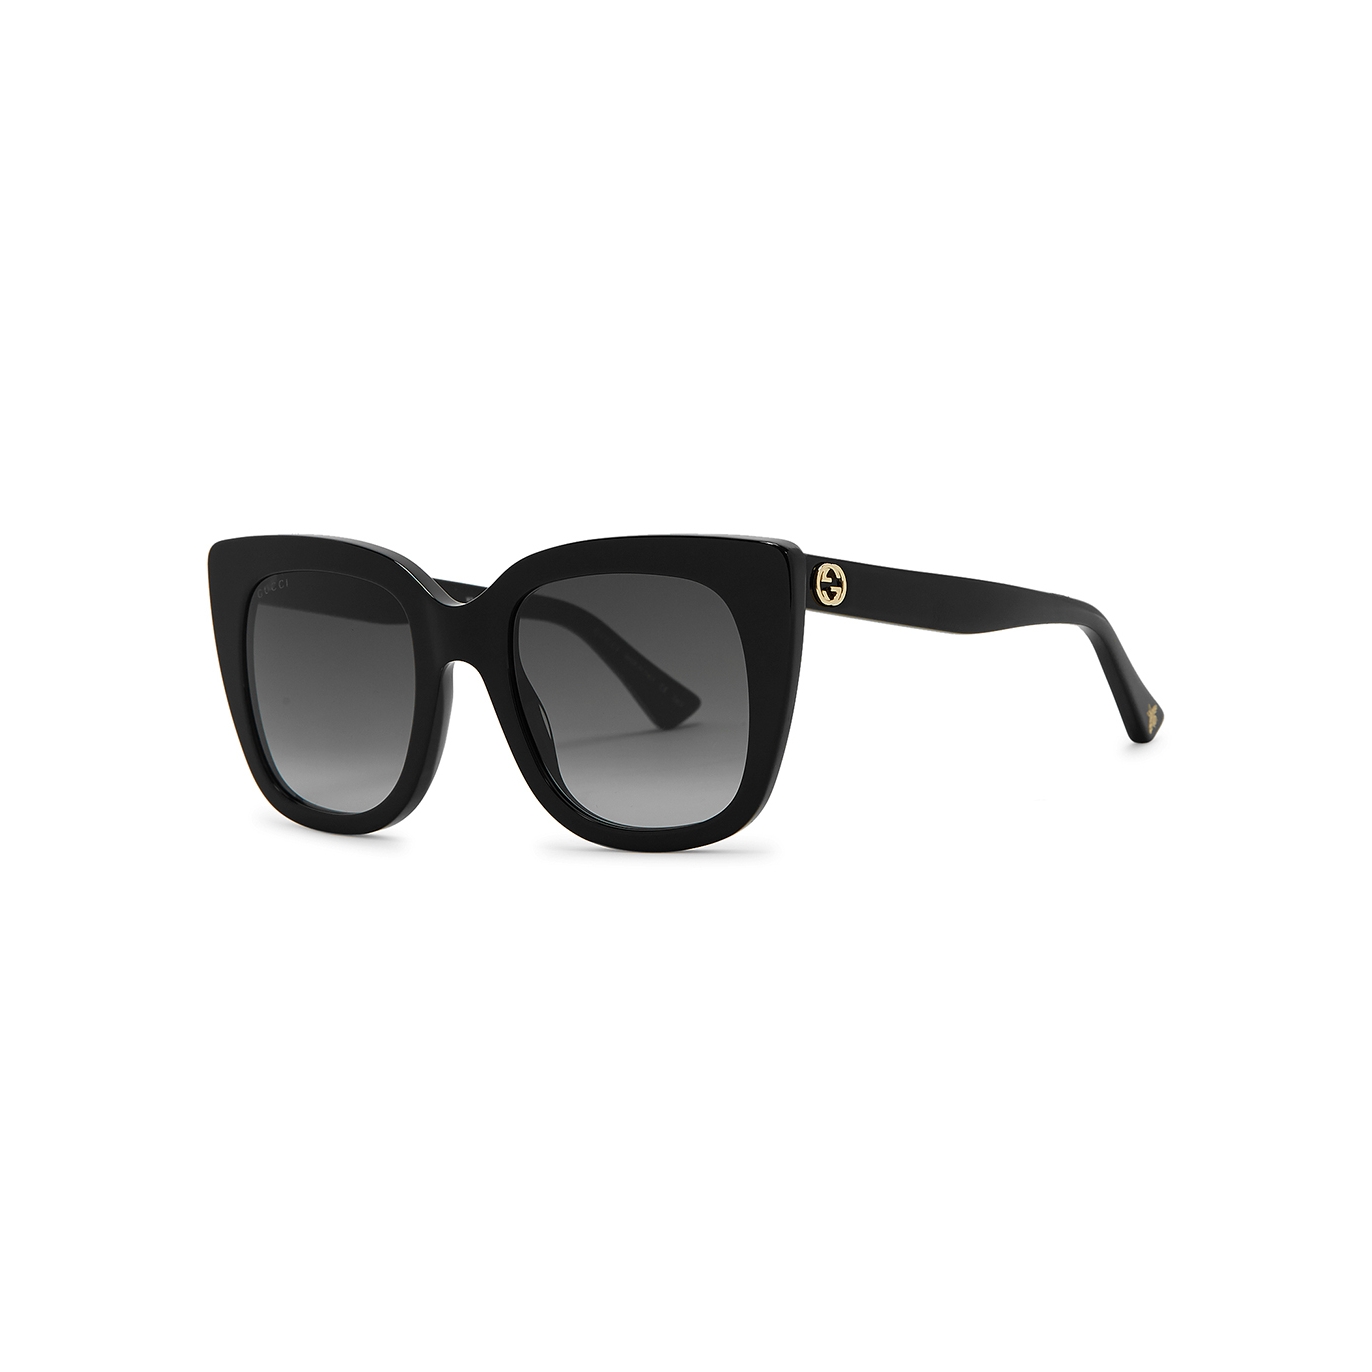 Gucci Black Cat-eye Sunglasses, Sunglasses, Black, Grey Lenses